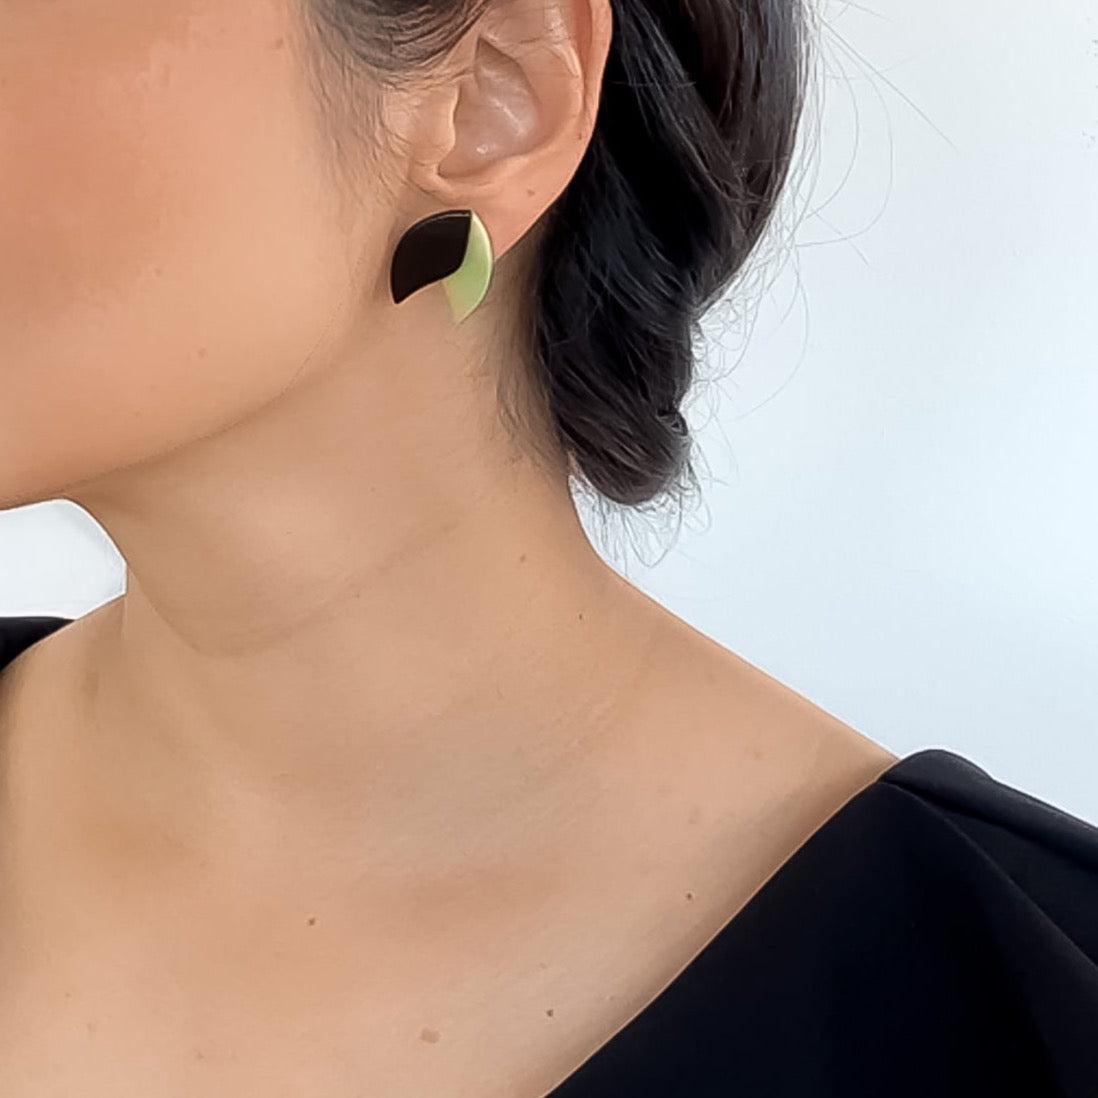 Model wearing Delicate earrings shape as a lotus flower in contrasting colours